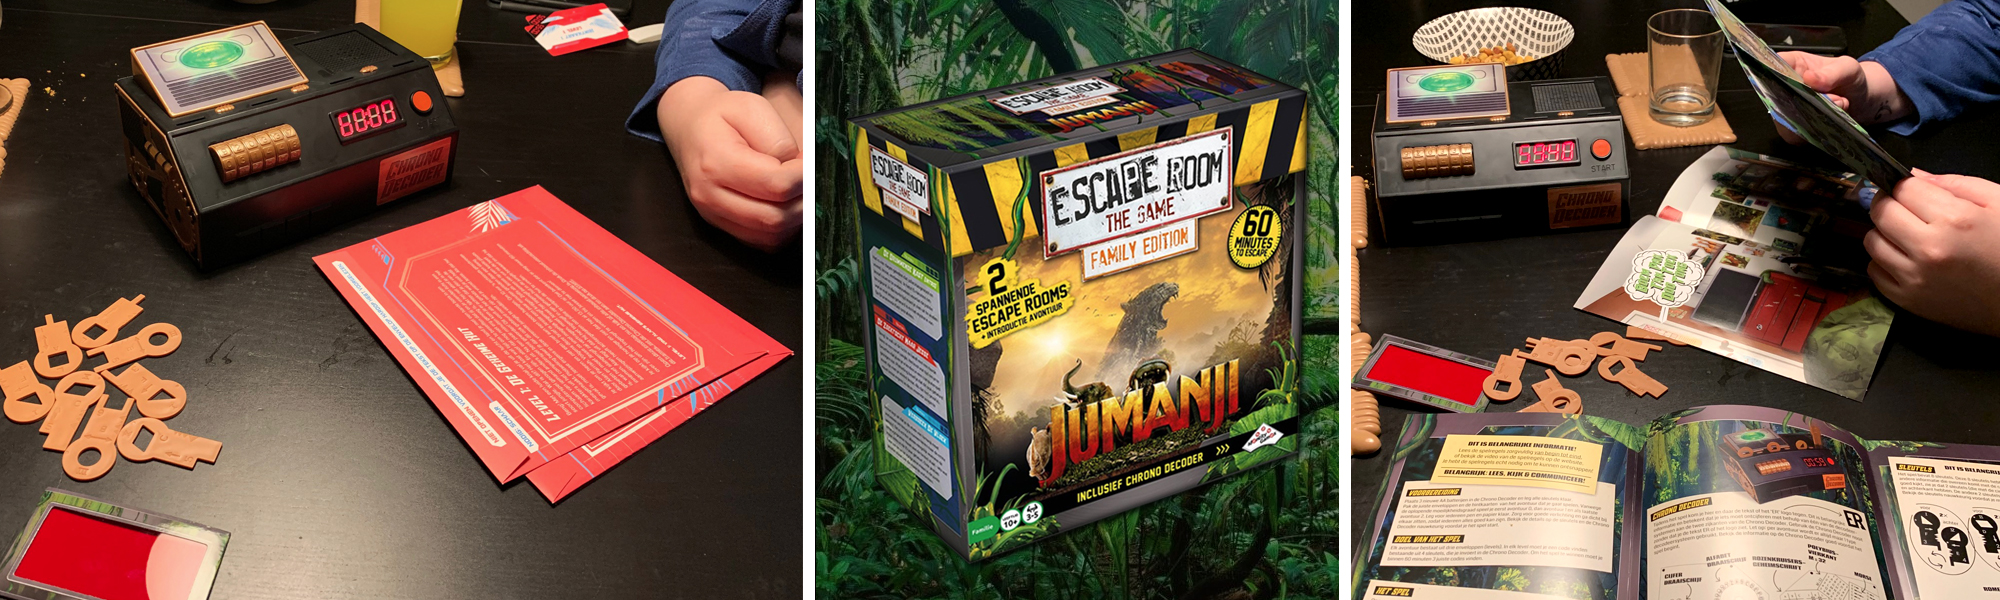 Escape Room The Game: Jumanji - Family Edition